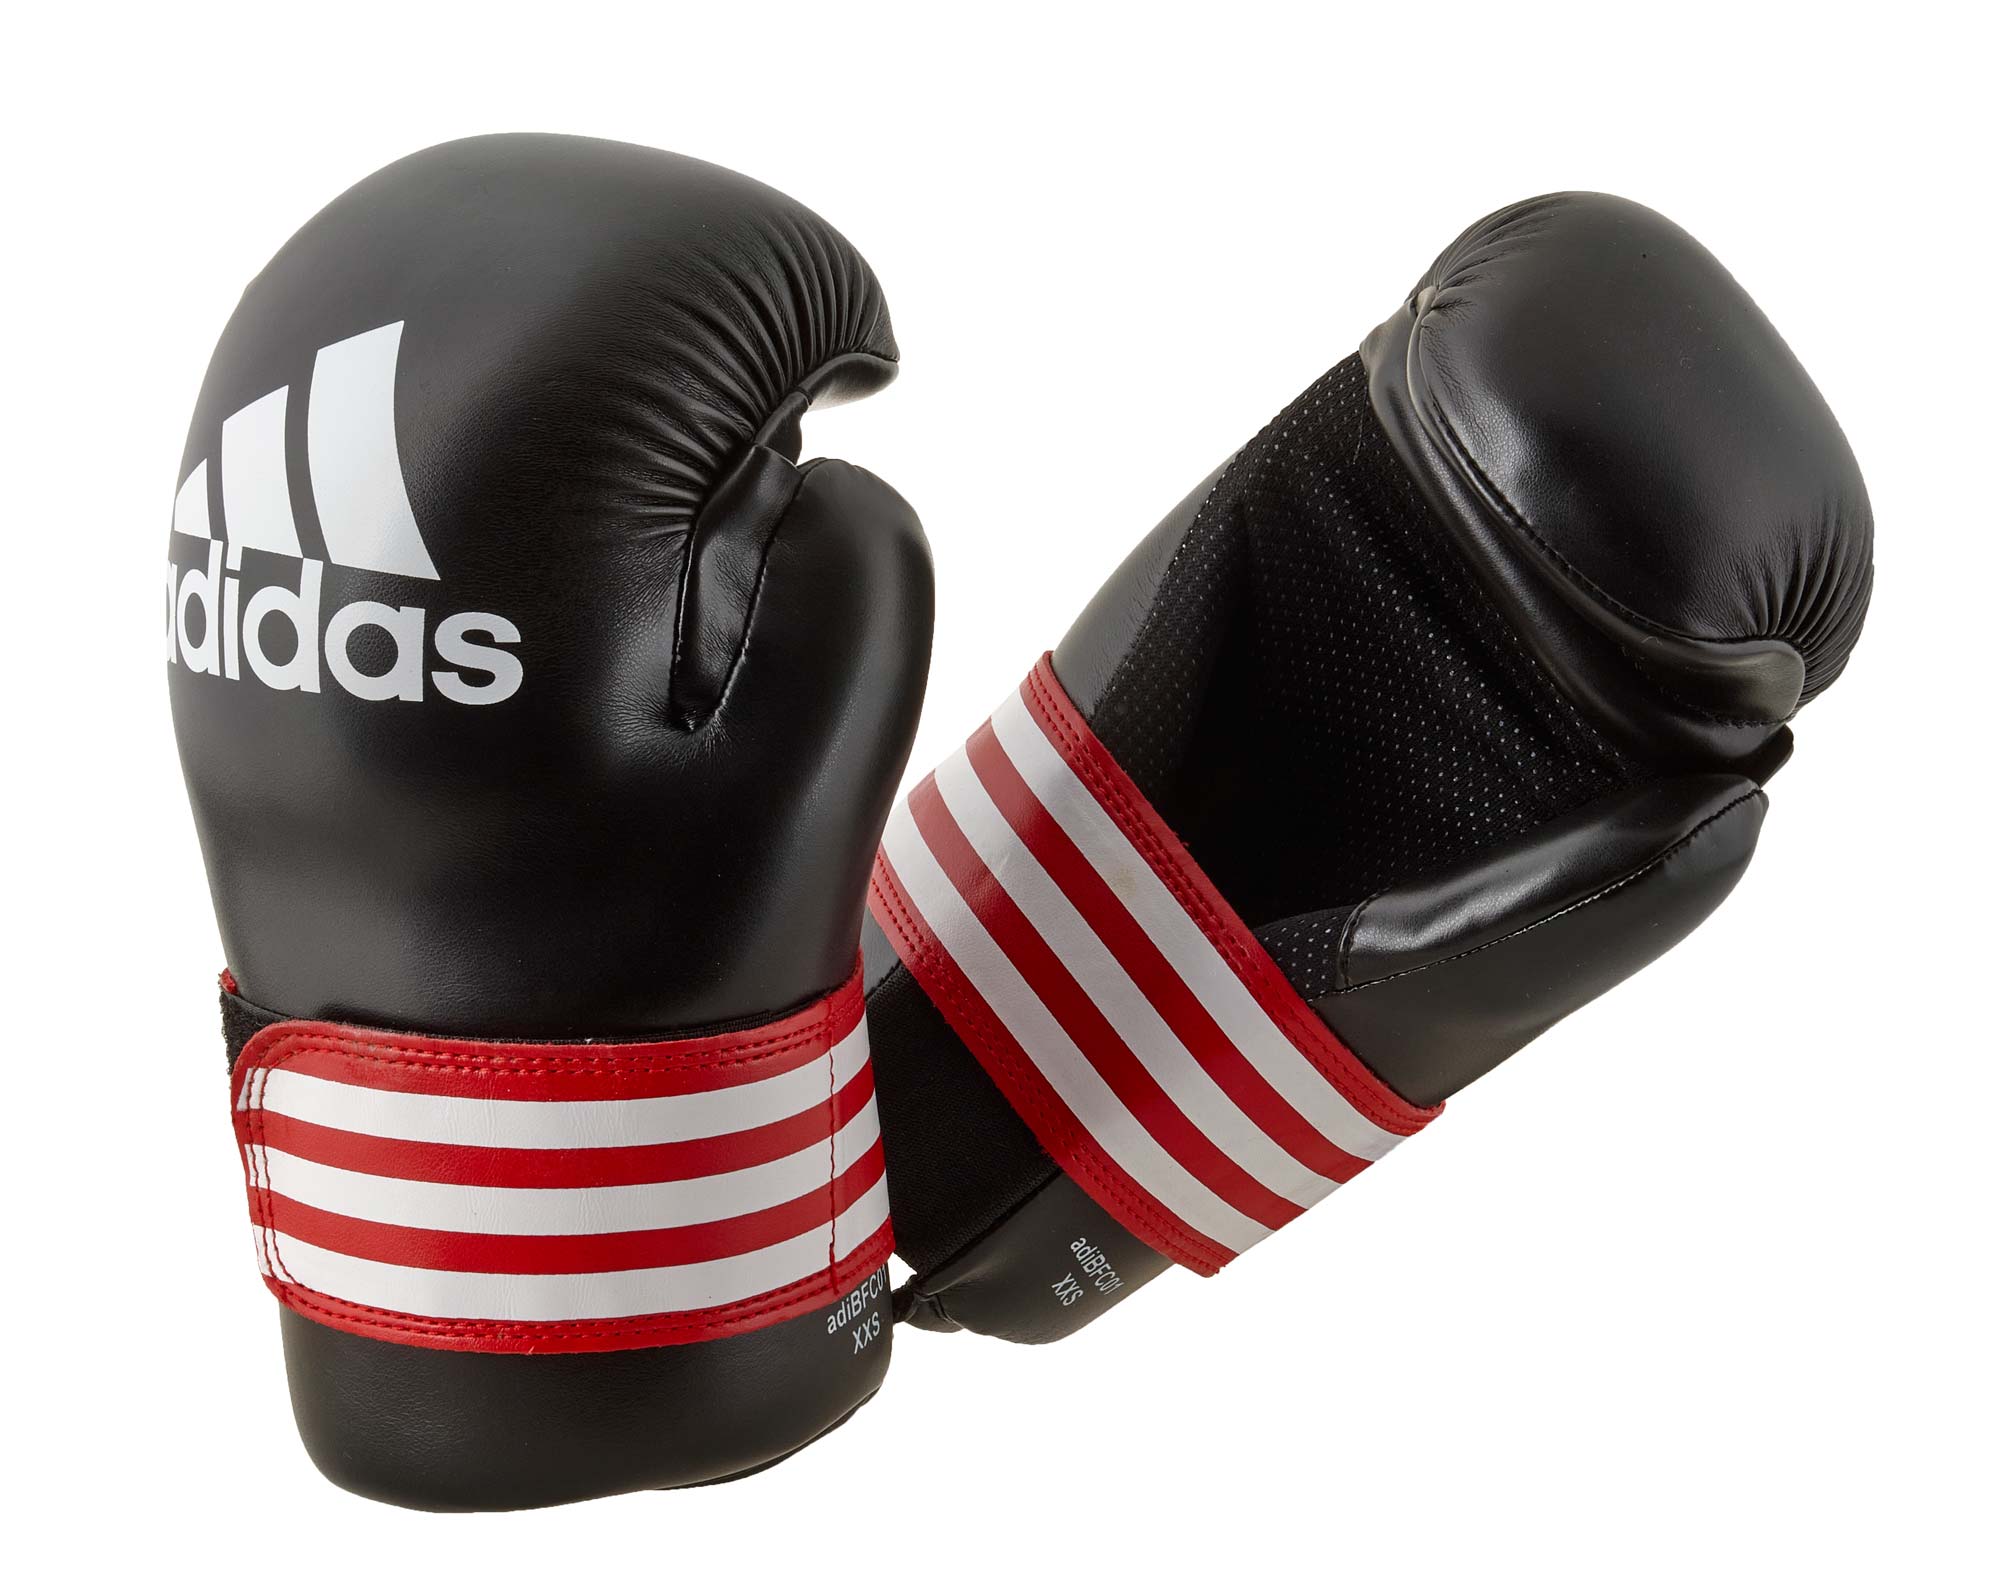 adidas semi contact kick boxing glove ADIBFC01, black/red